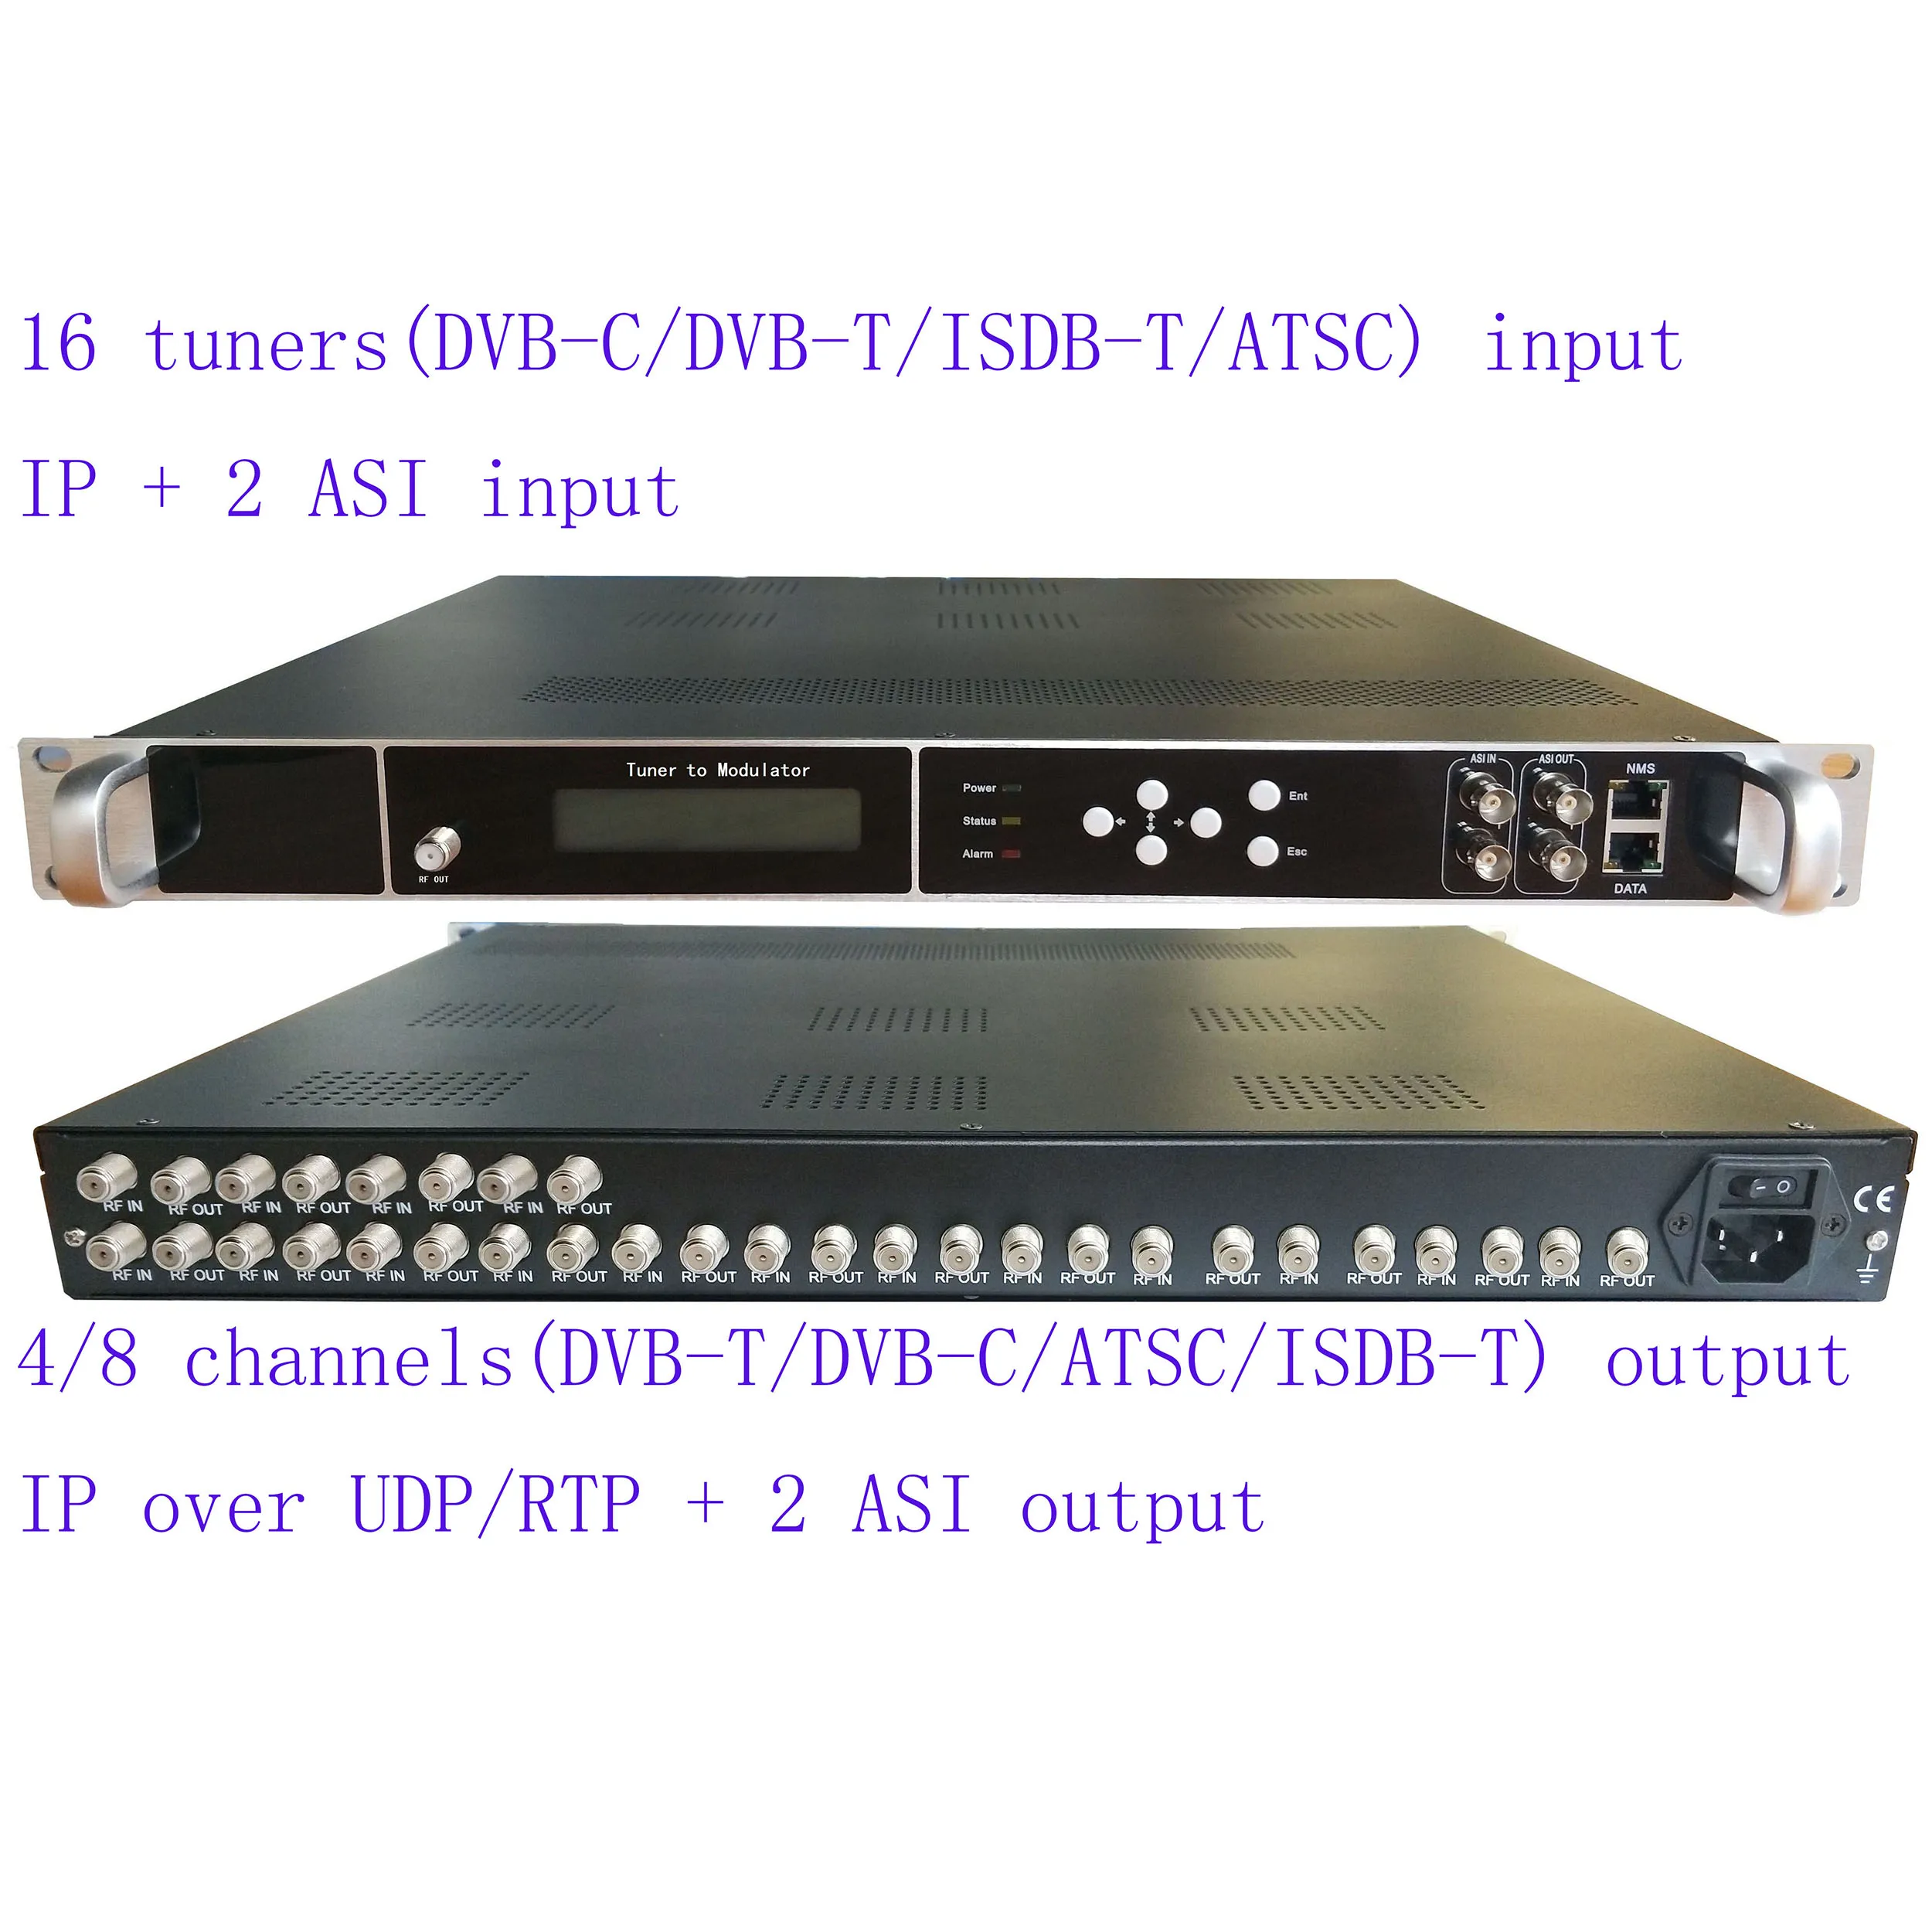 

16 way dvb-s2/S to ISDB-T catv modulator, 16 way ISDB-T tuner to ISDB-T RF modulator, TV headend for school/hospital/hotel